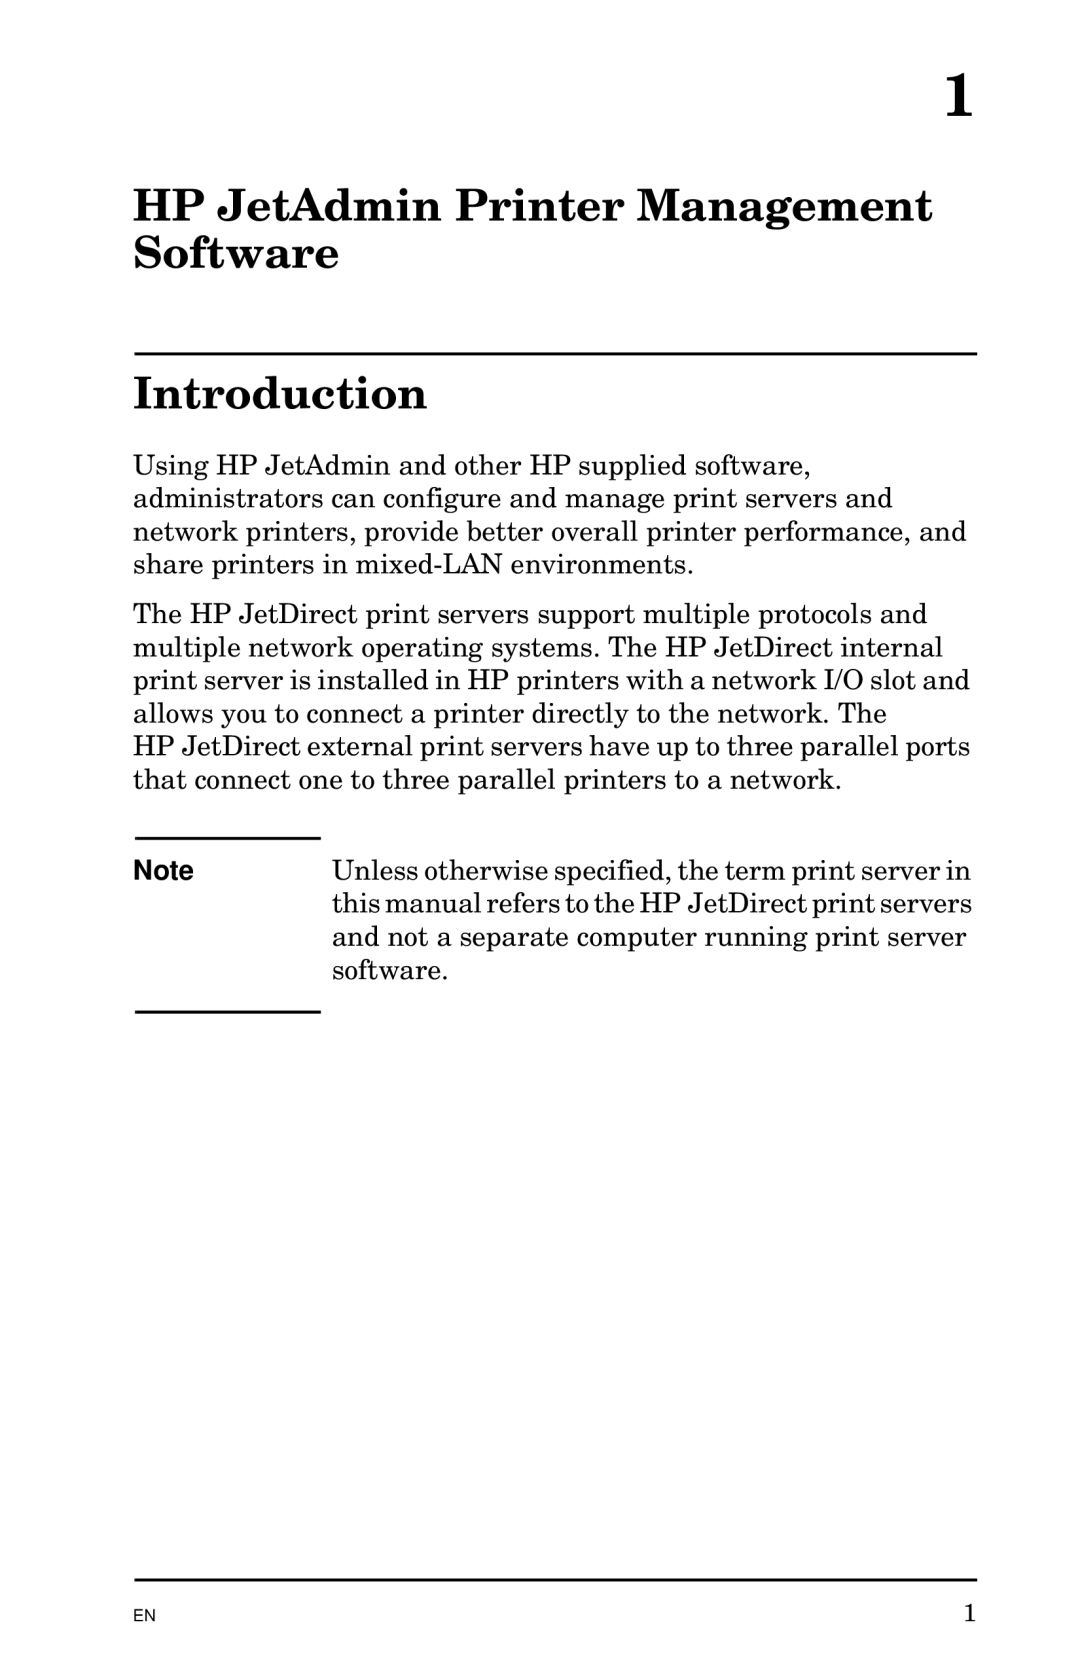 HP Jetadmin Software for OS/2 manual HP JetAdmin Printer Management Software Introduction 